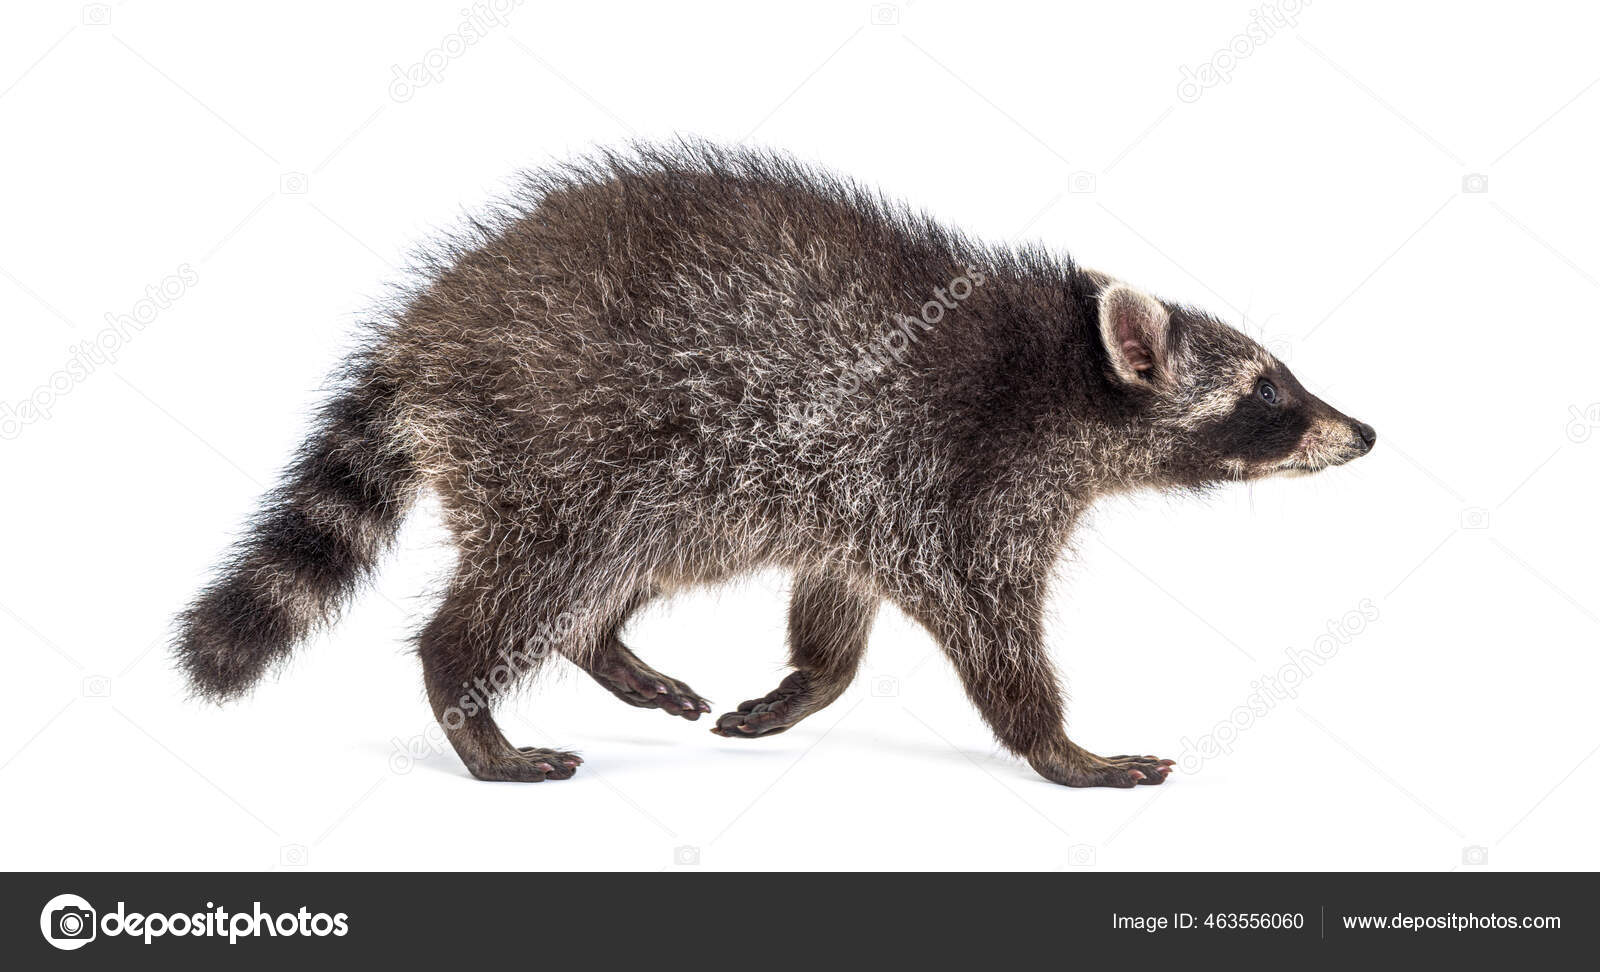 depositphotos_463556060-stock-photo-side-view-young-walking-raccoon.jpg